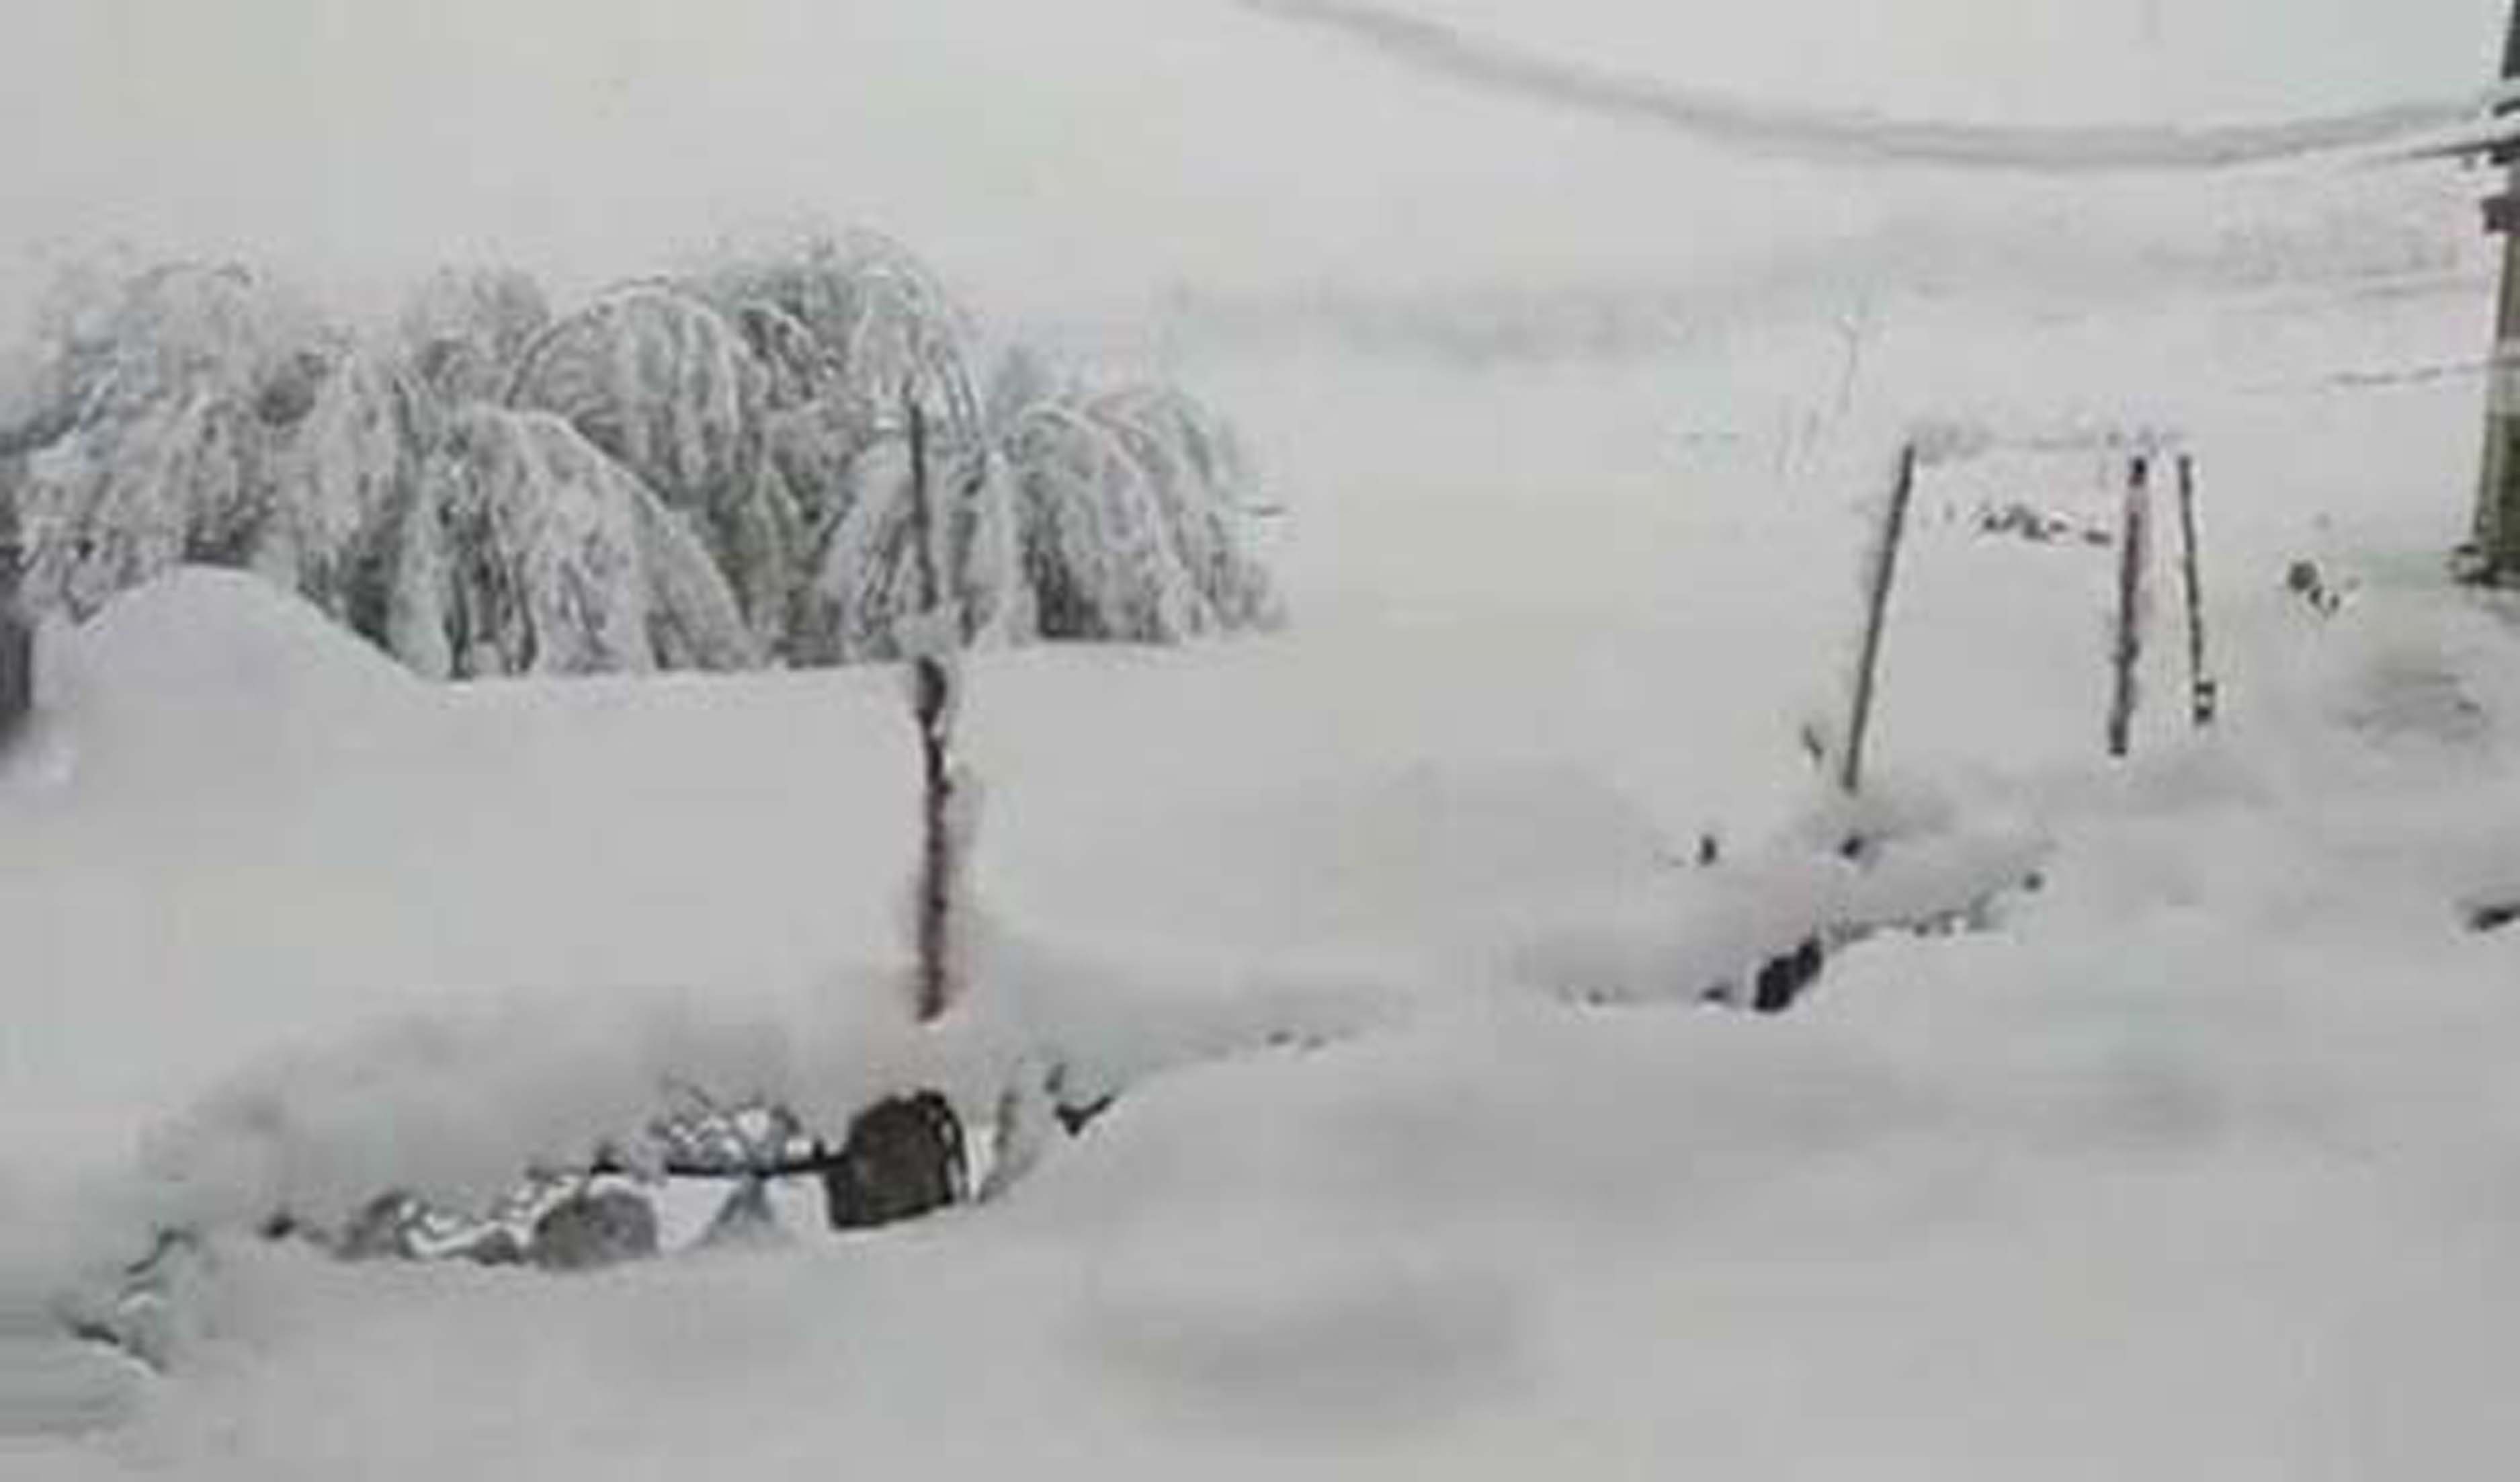 Drass in Kargil freezes at minus 10.4